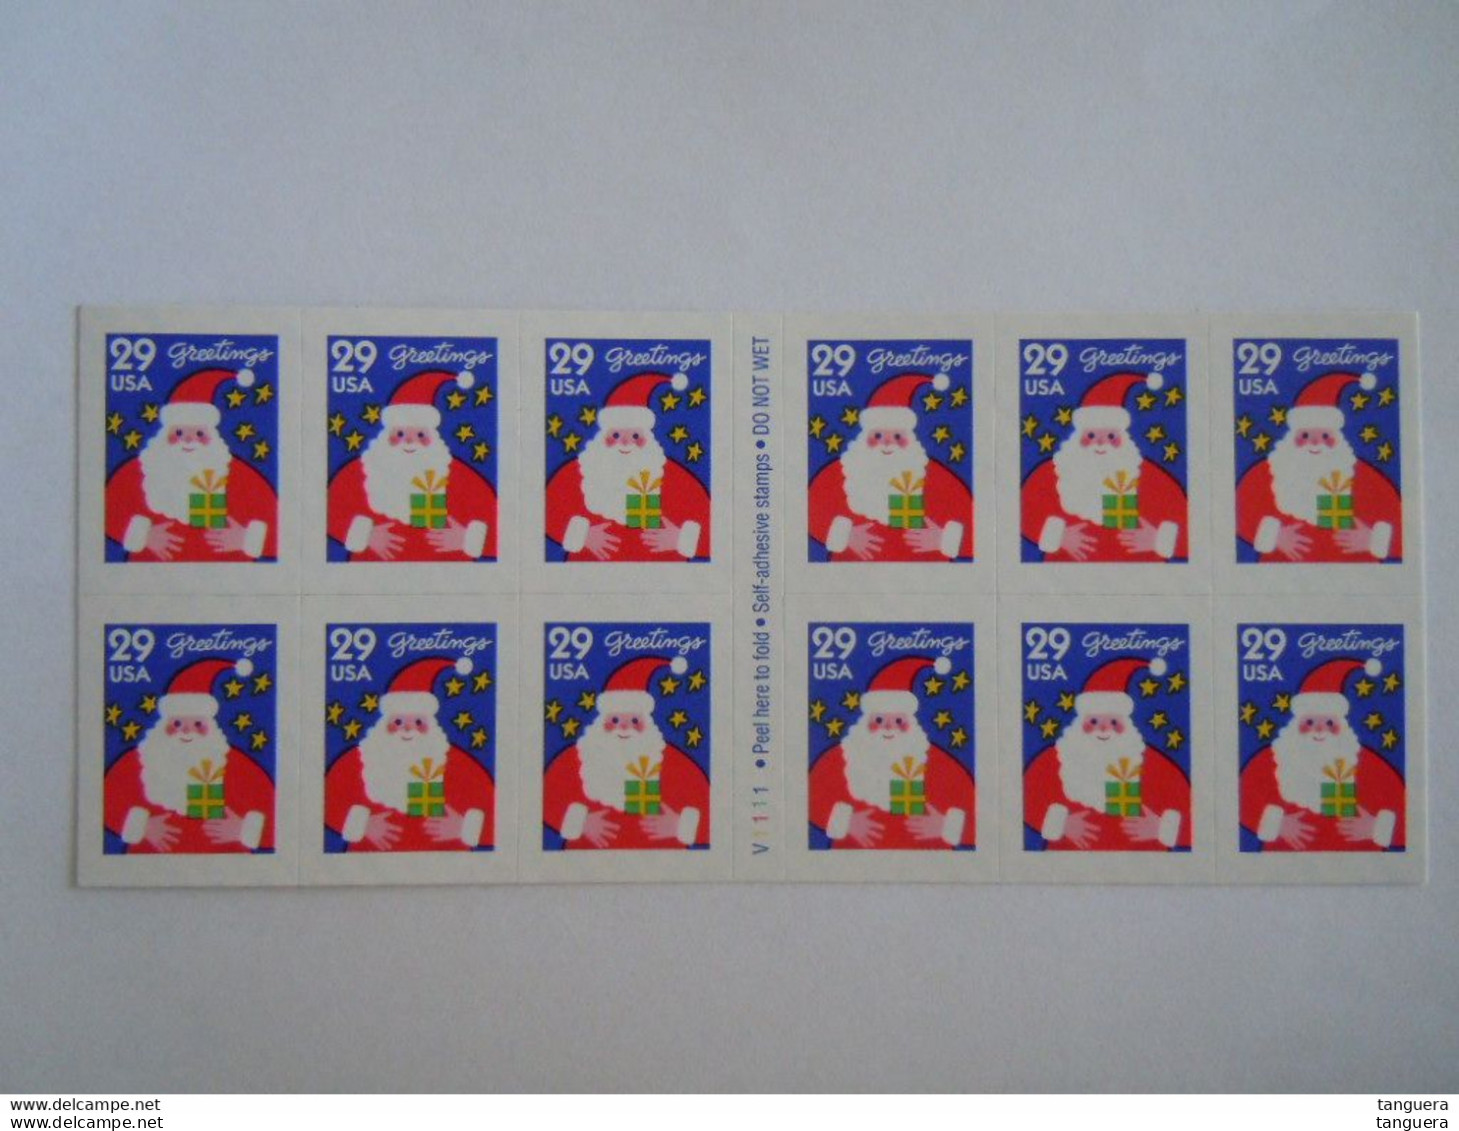 USA Etats-Unis United States 1994 Greetings Santa Claus Sc 2873 Yv C2289 2289 MNH ** Carnet Booklet Pane - 1981-...